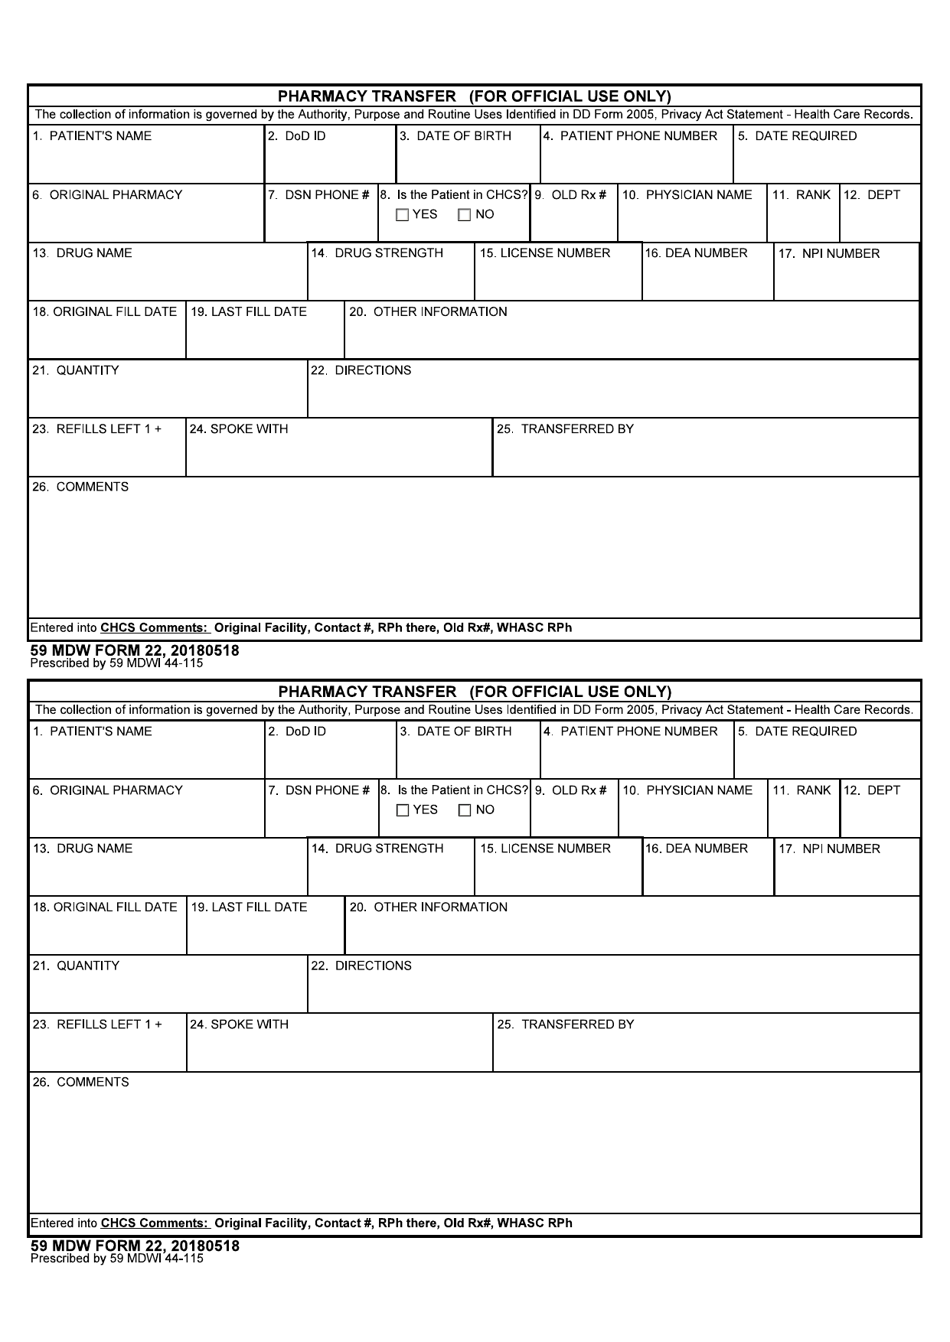 59 MDW Form 22 Pharmacy Transfer, Page 1